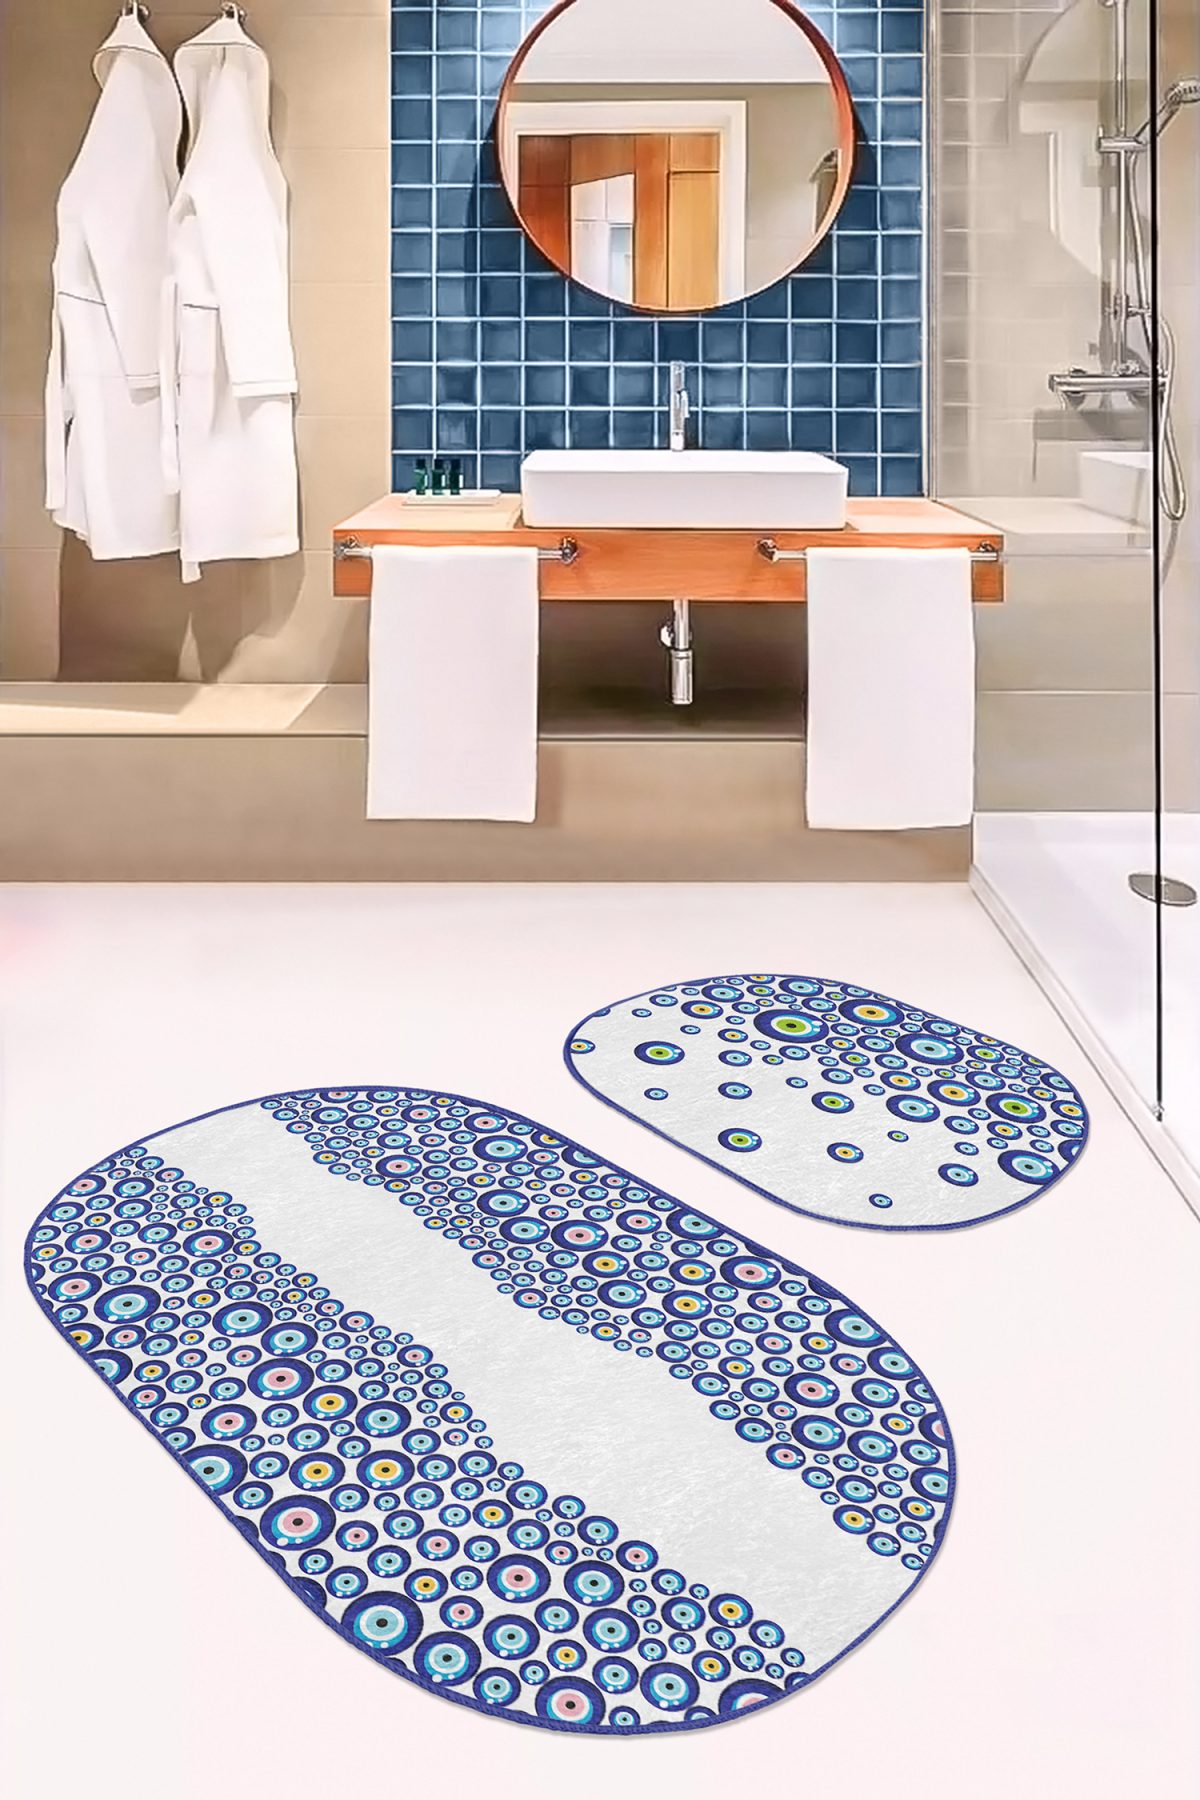 Beyaz Zemin Nazar Boncuklu Özel Tasarım 2'li Oval Kaymaz Tabanlı Banyo & Mutfak Paspas Takımı Realhomes